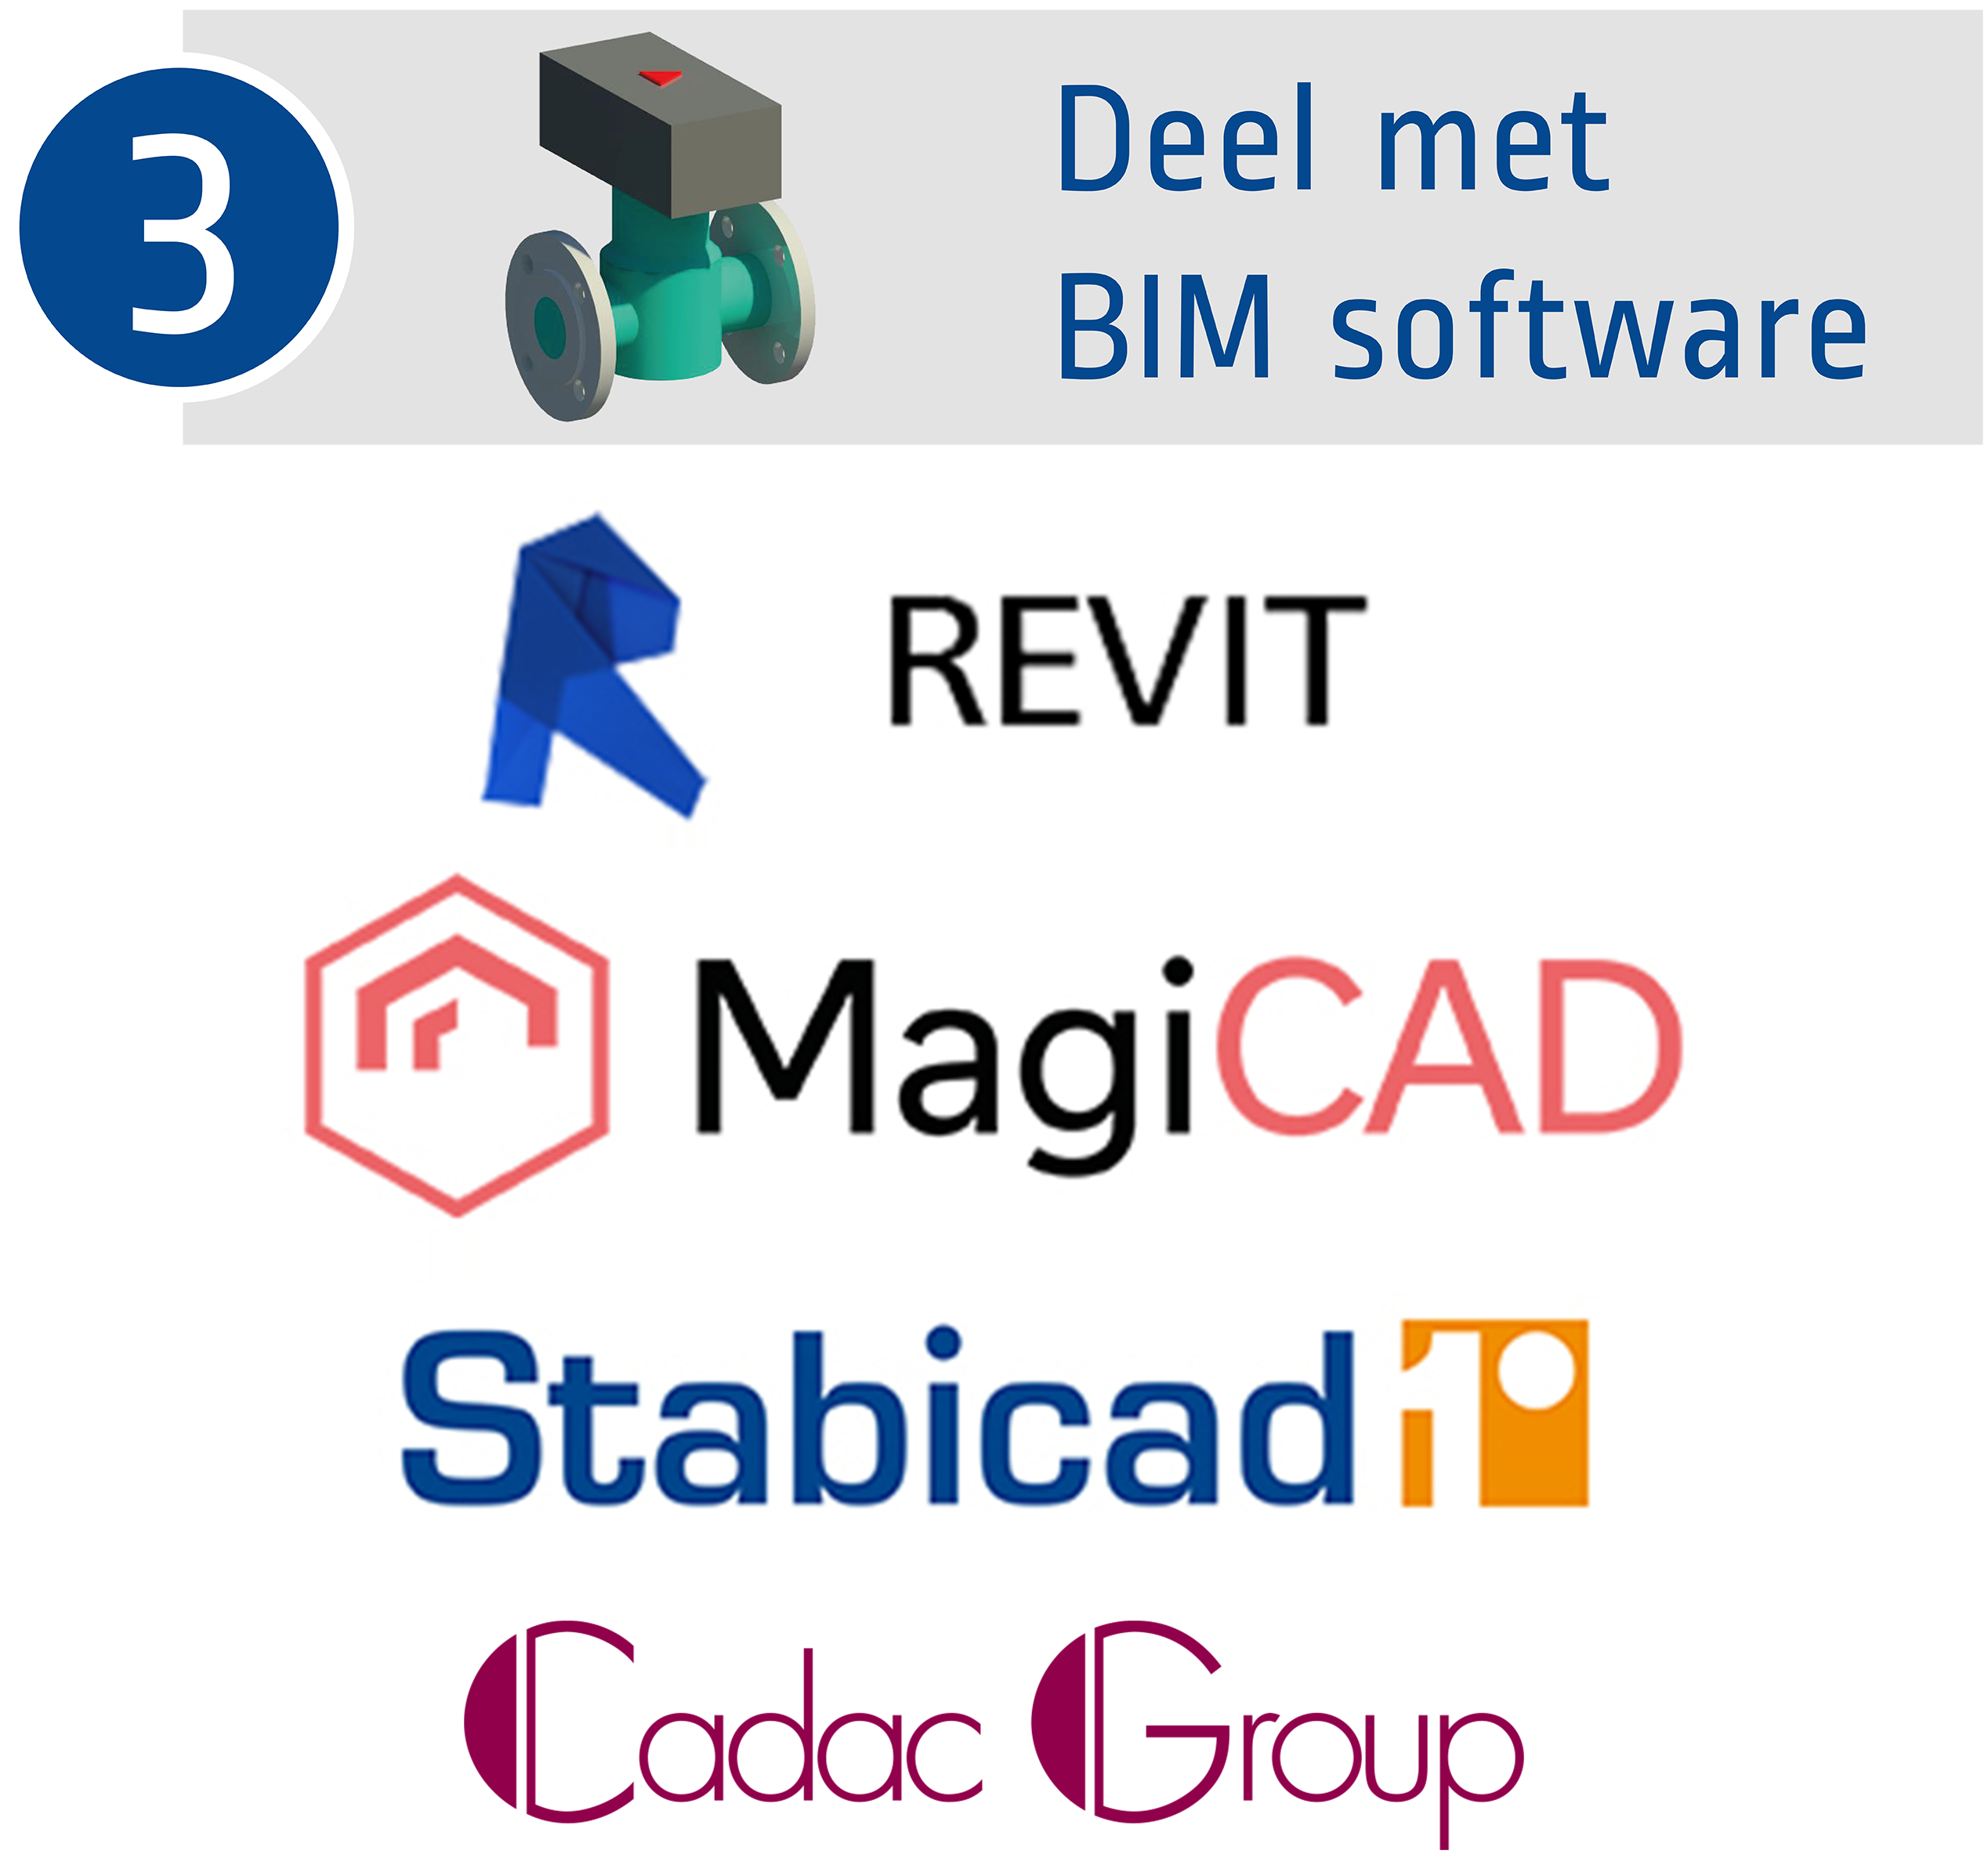 Compano BIM ETIM MC stap 3 - deel met BIM-softwarepartners Revit, MagiCad, Stabicad, Cadac